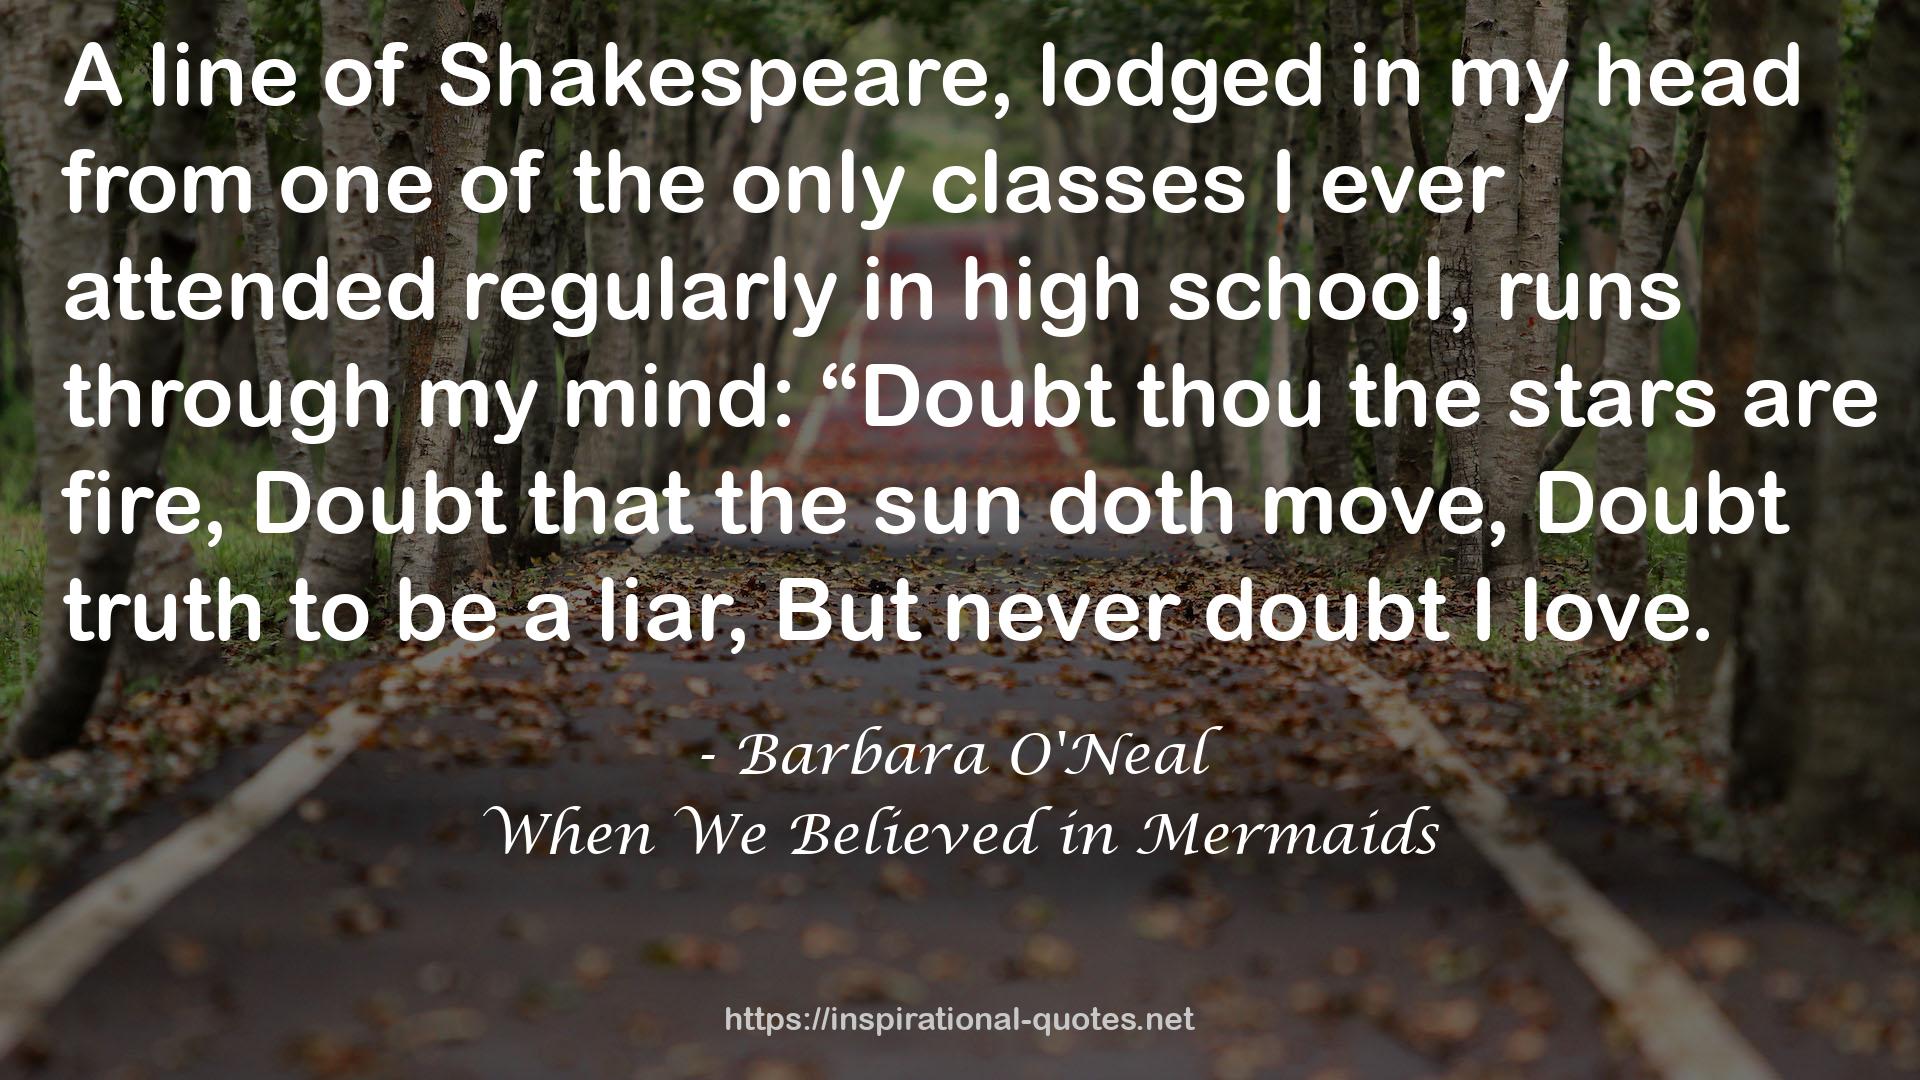 When We Believed in Mermaids QUOTES